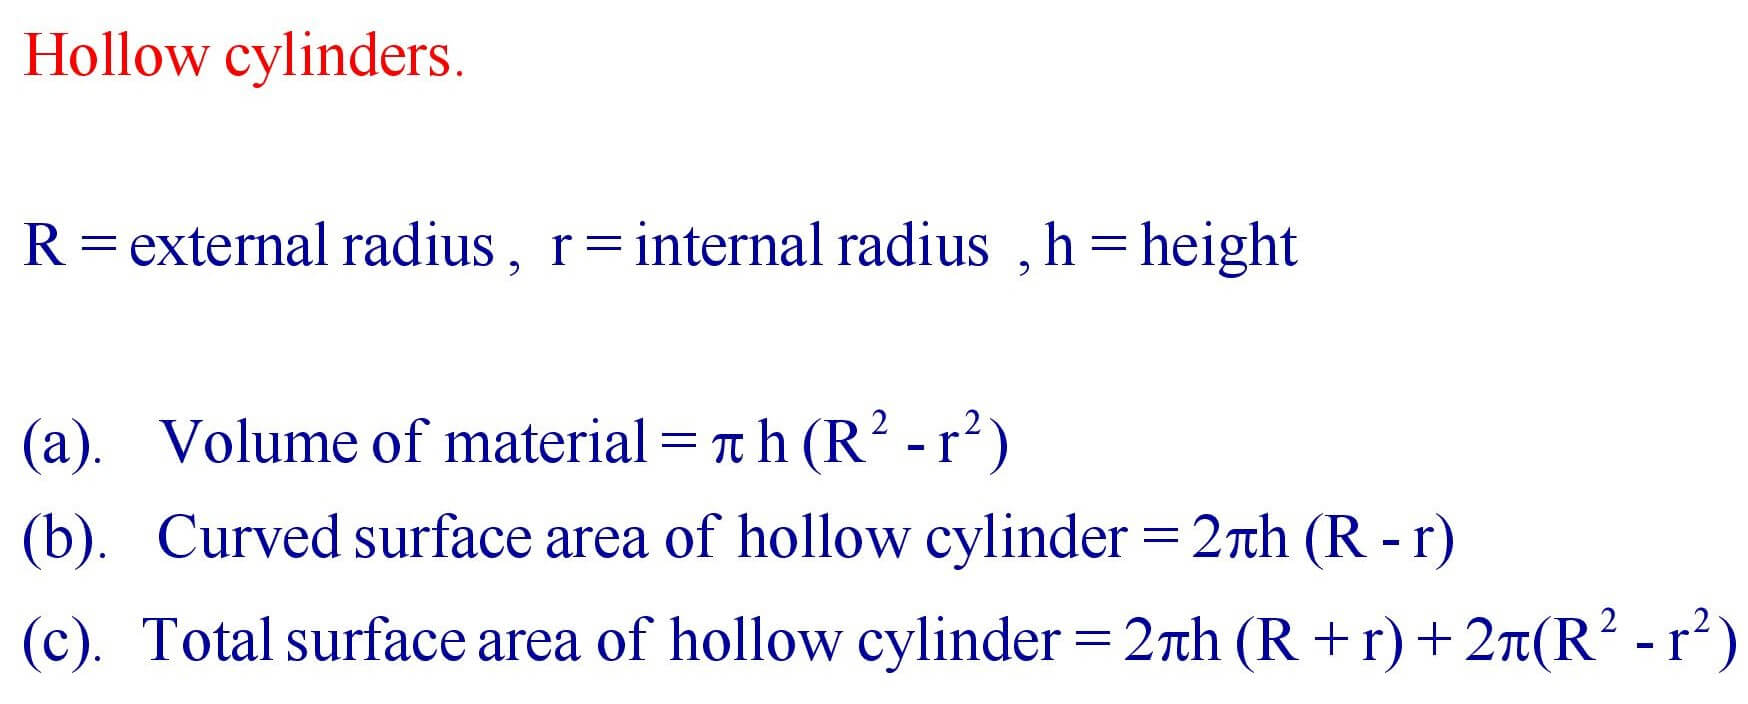 Hollow Cylinders Formula